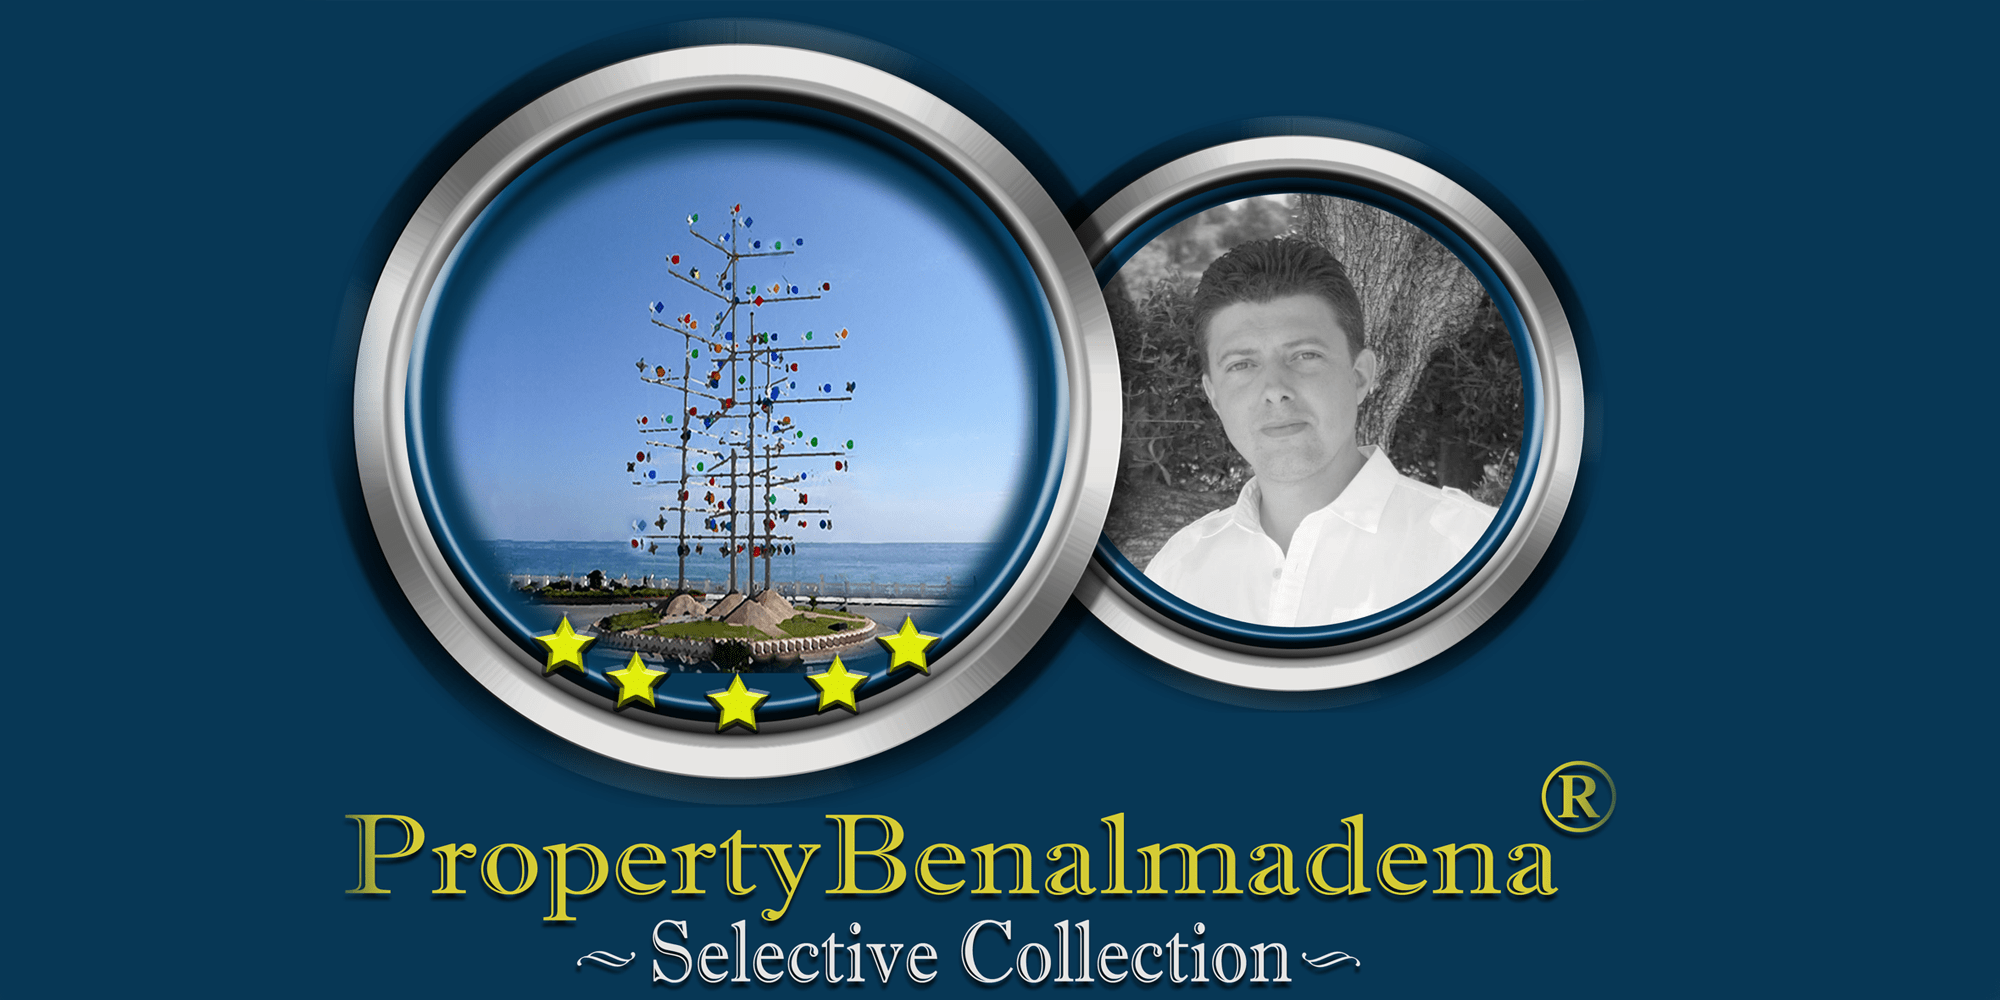 Benalmadena Property Sales Specialists Since 2004